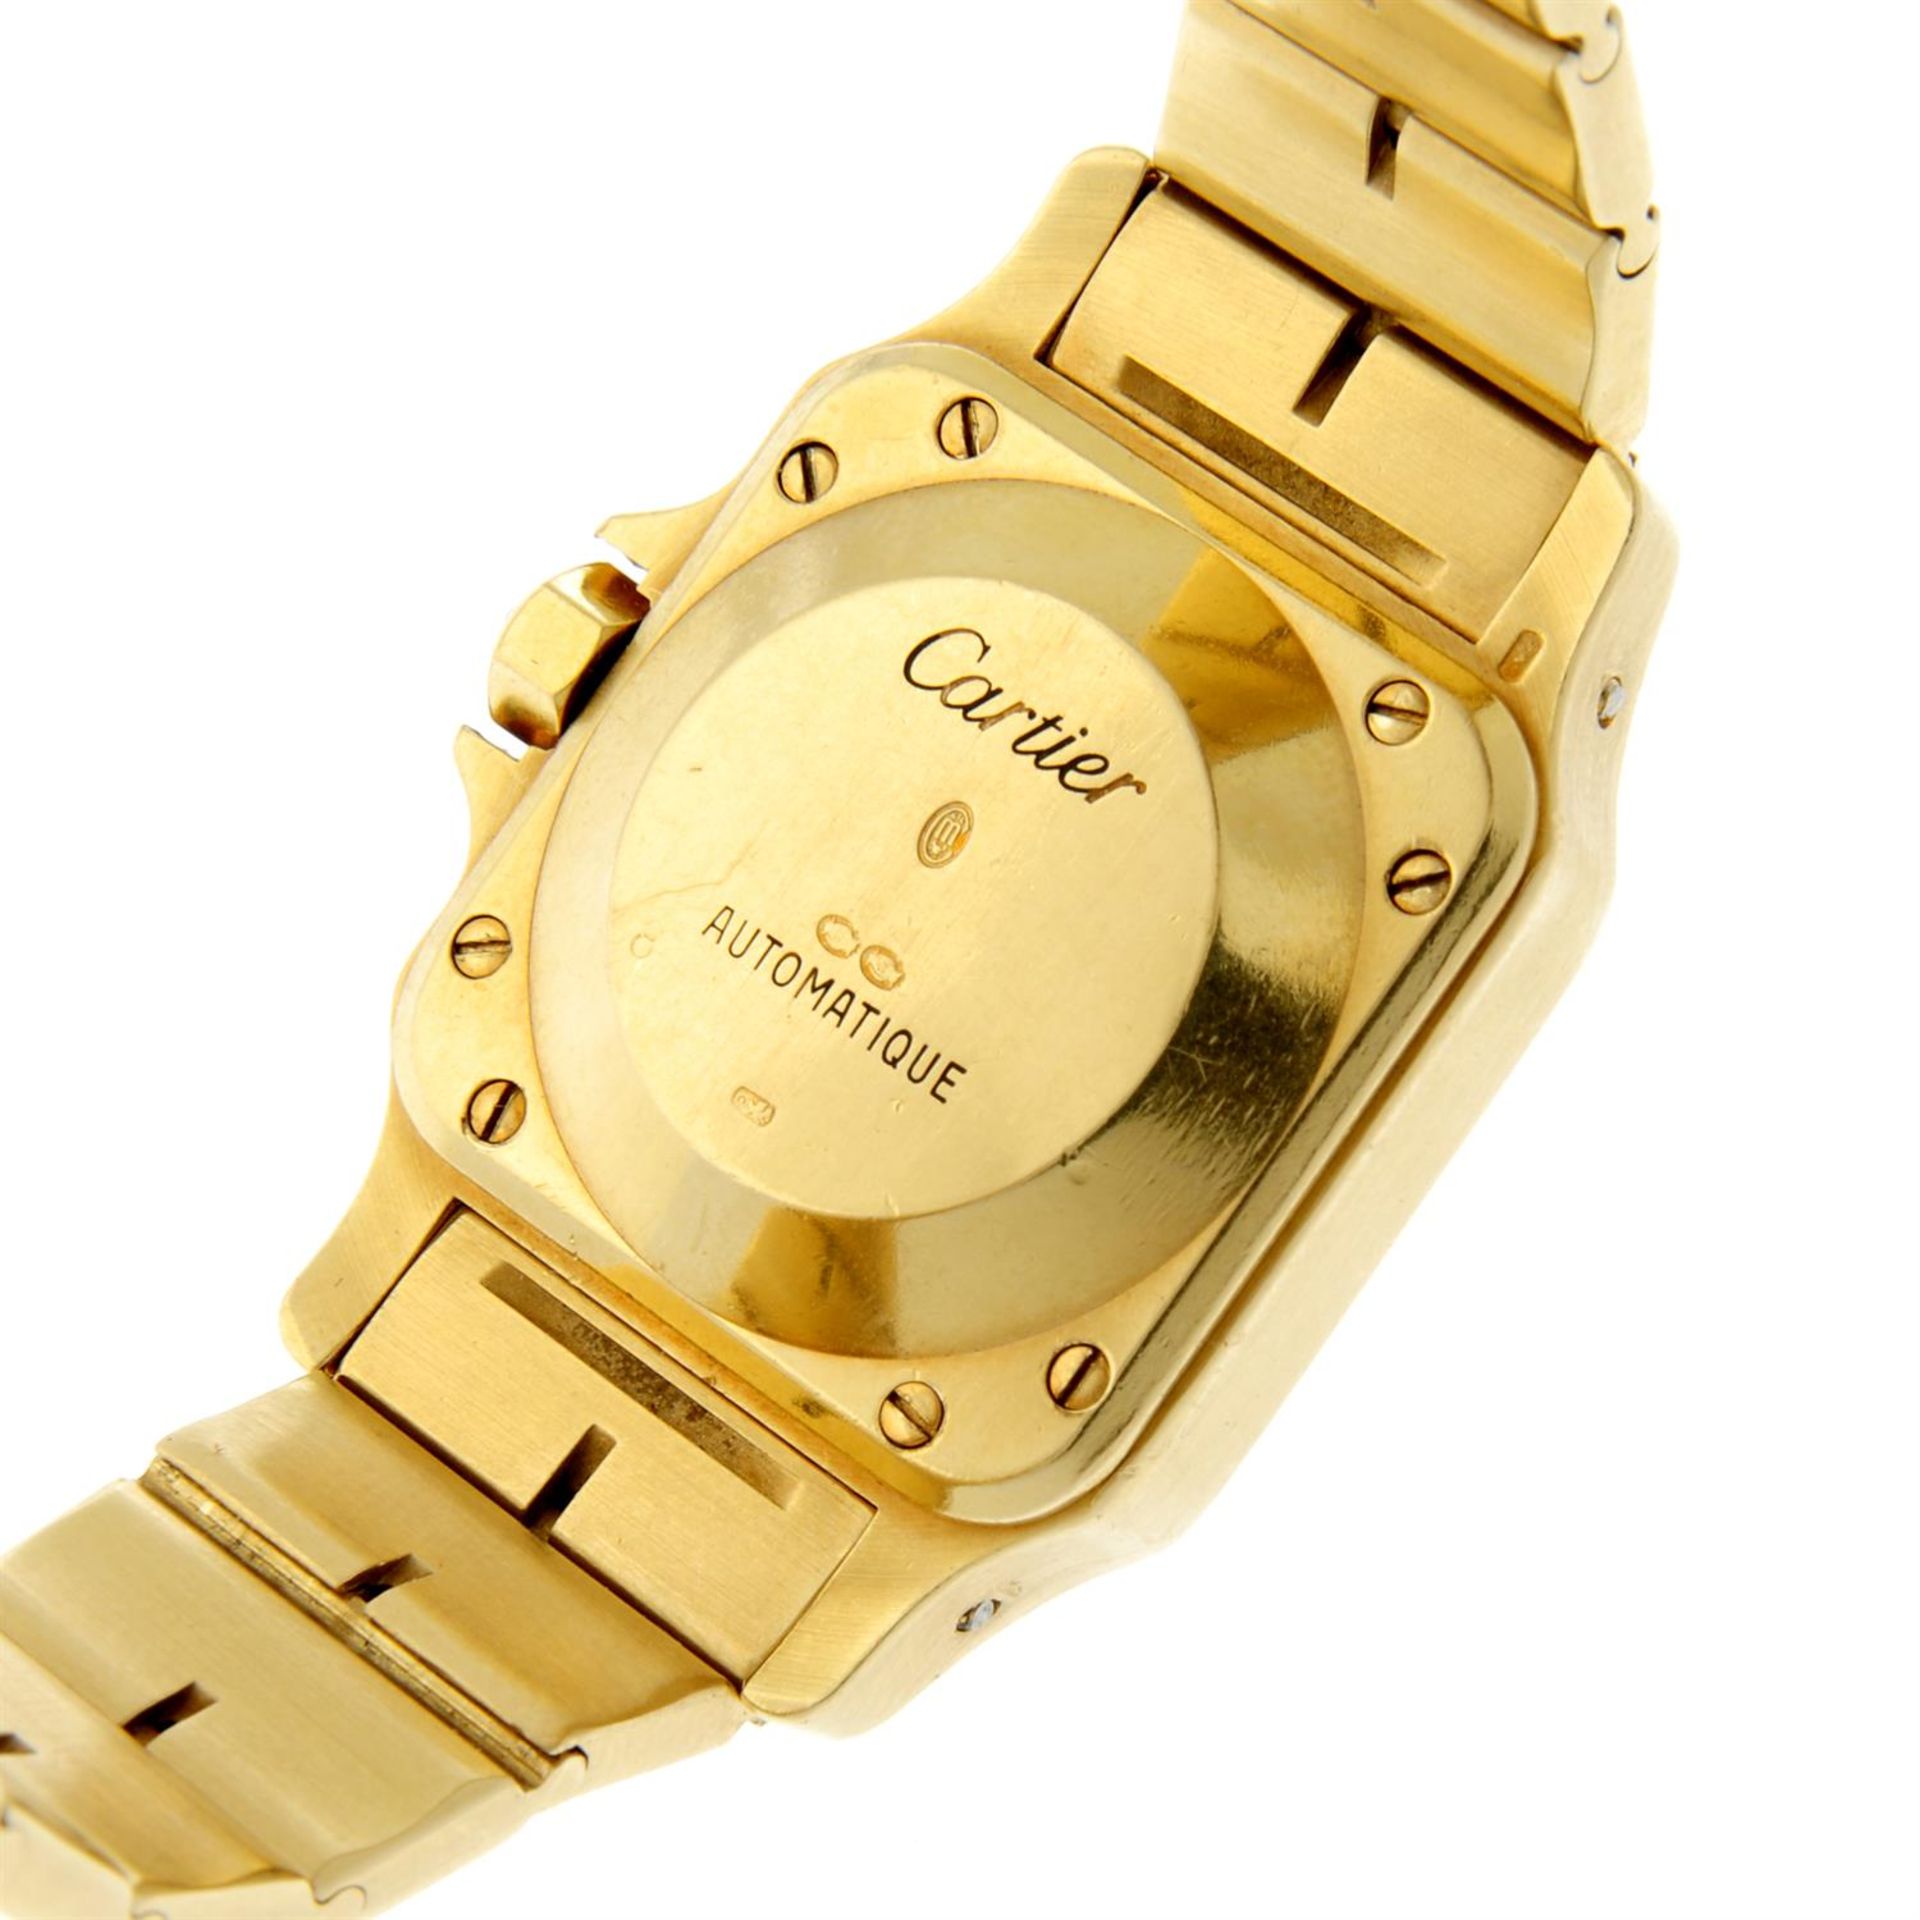 CARTIER - an 18ct gold diamond set Santos bracelet watch, 24mm. - Image 4 of 5